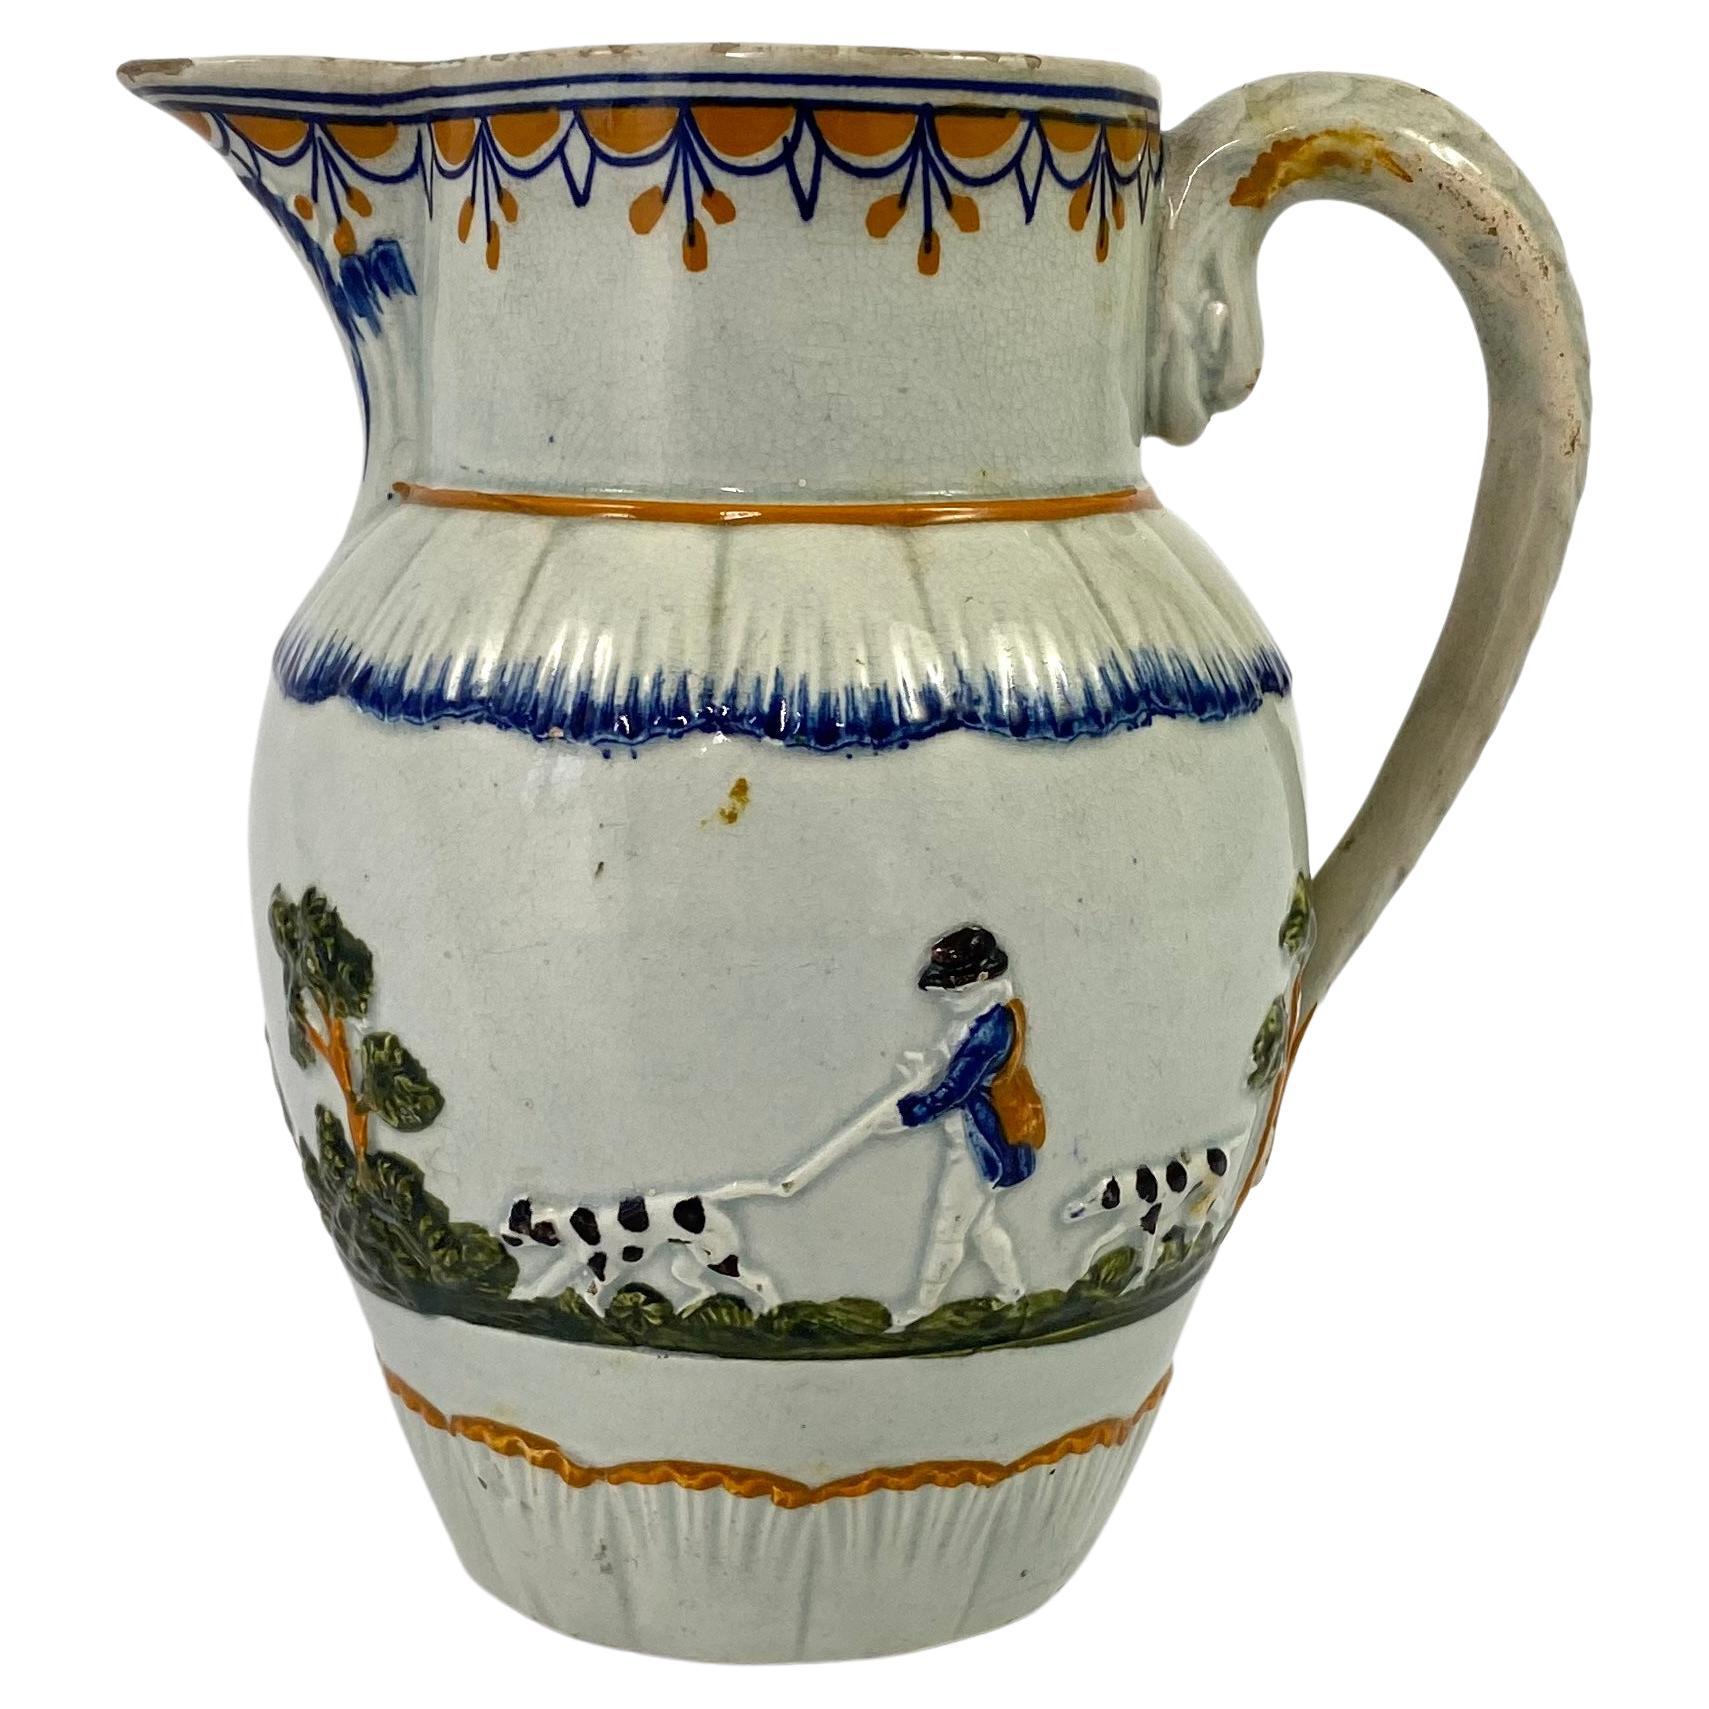 Prattware Pottery Hunting Jug, C. 1810